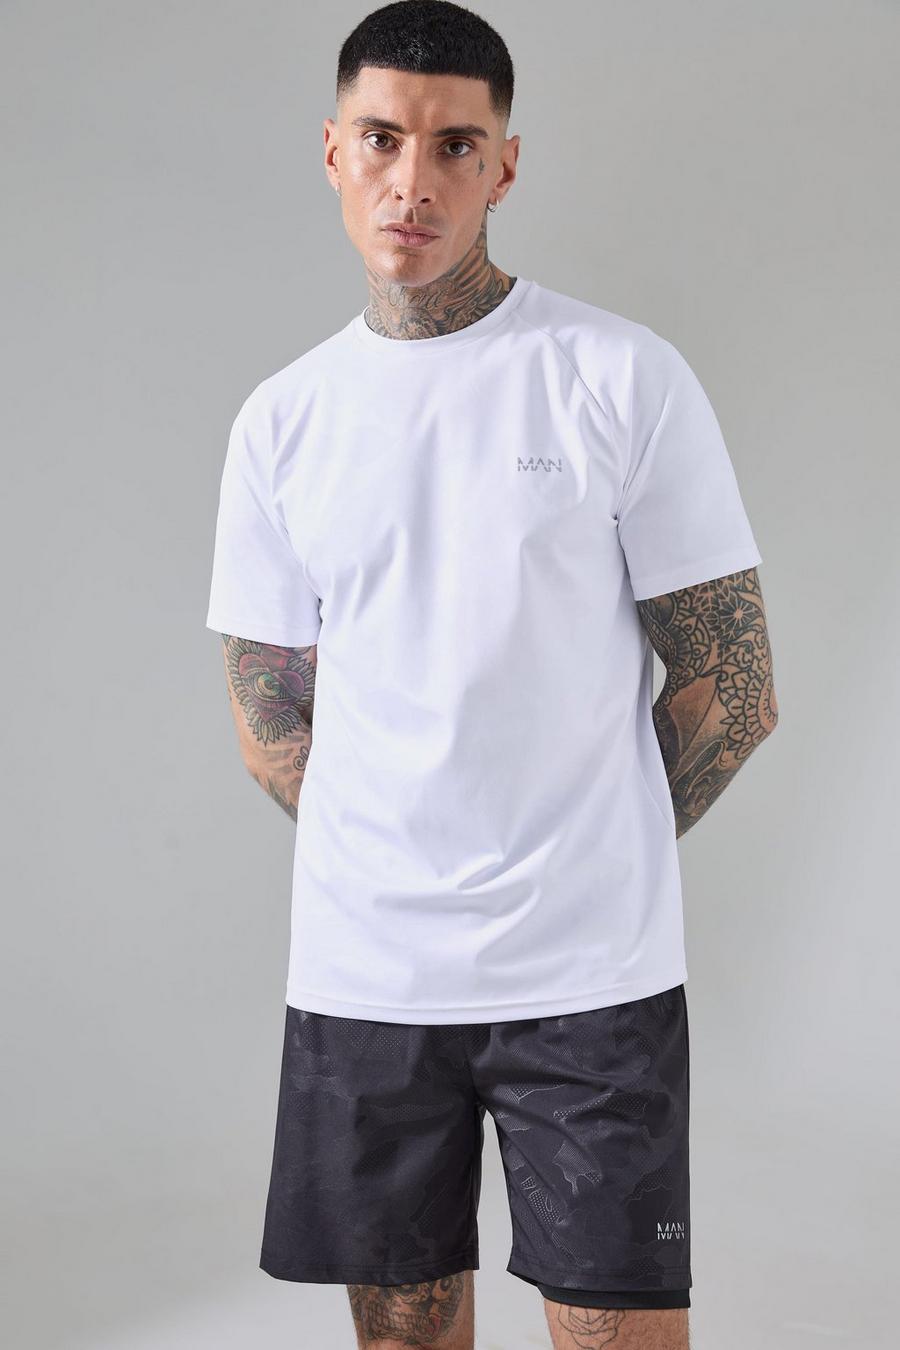 White Tall Man Active Camo Raglan Performance T-shirt